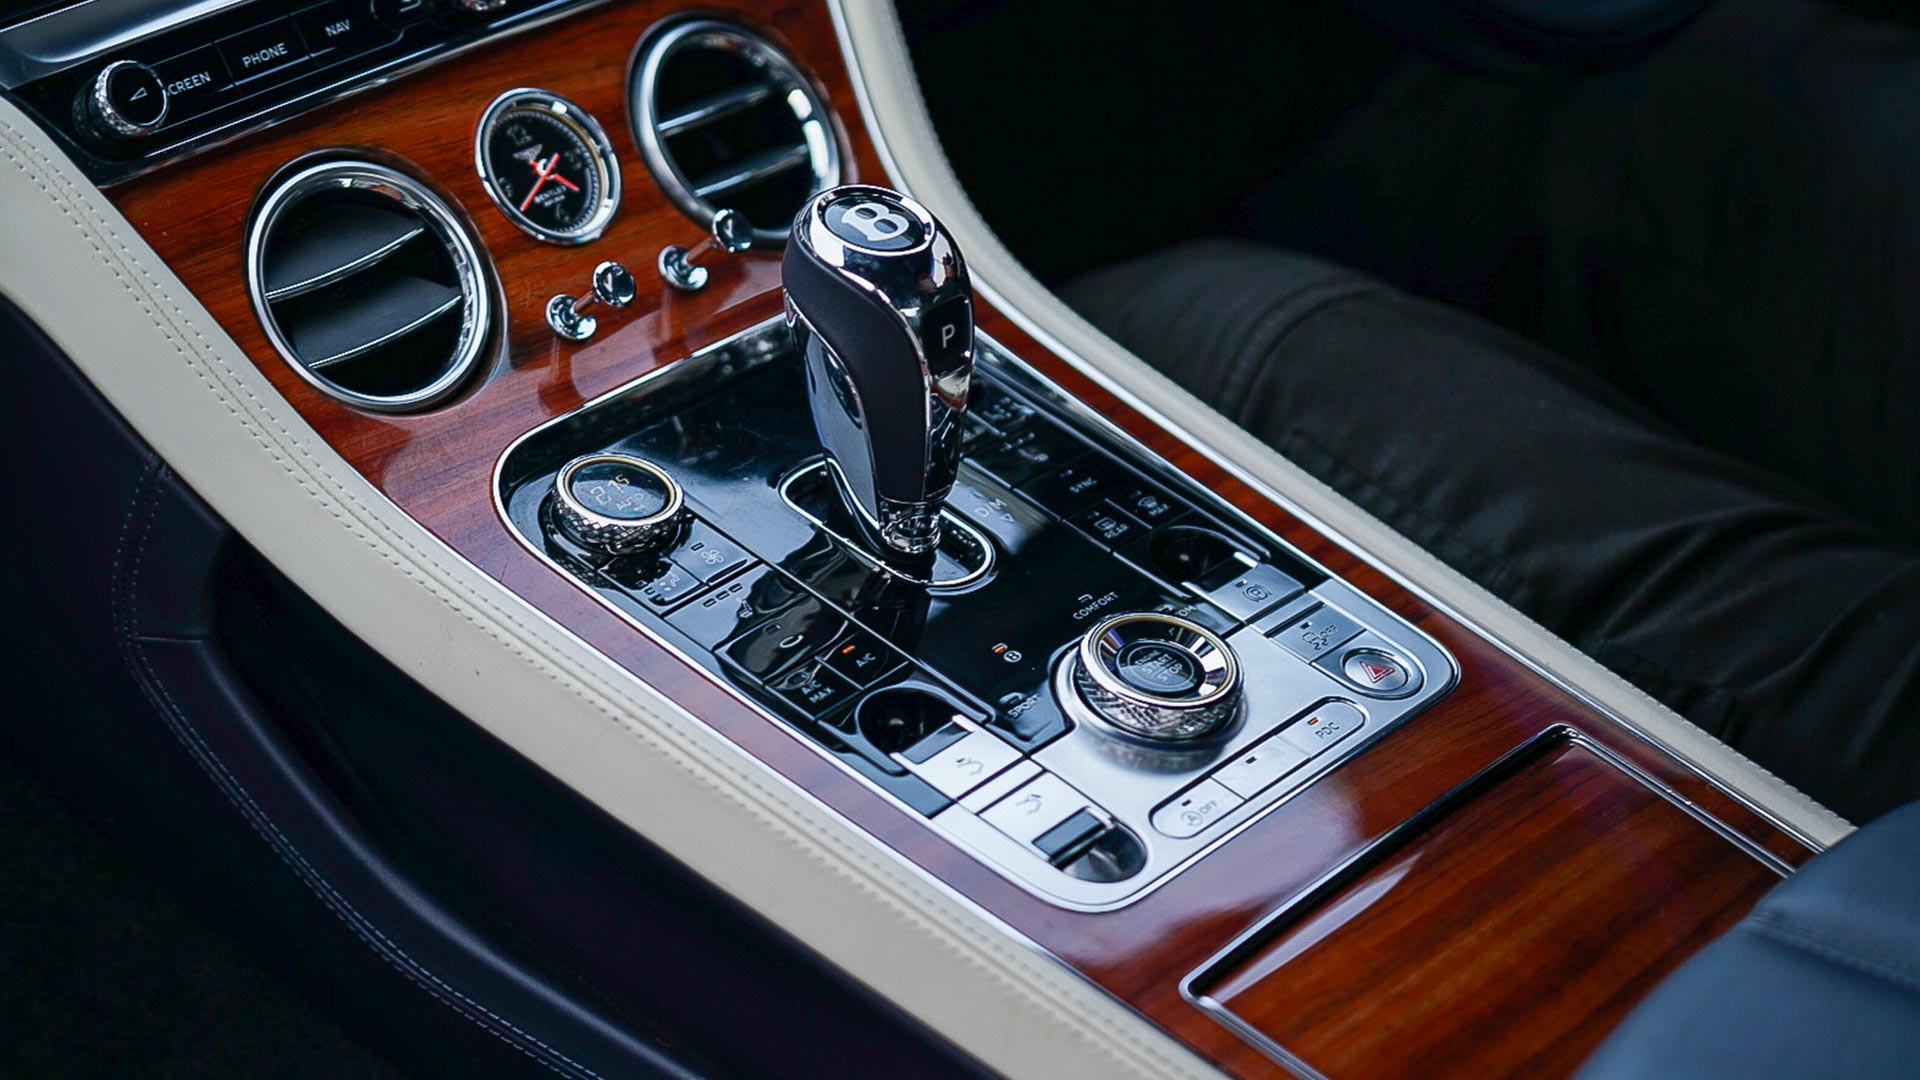 Prasads Automotive Bentley GT